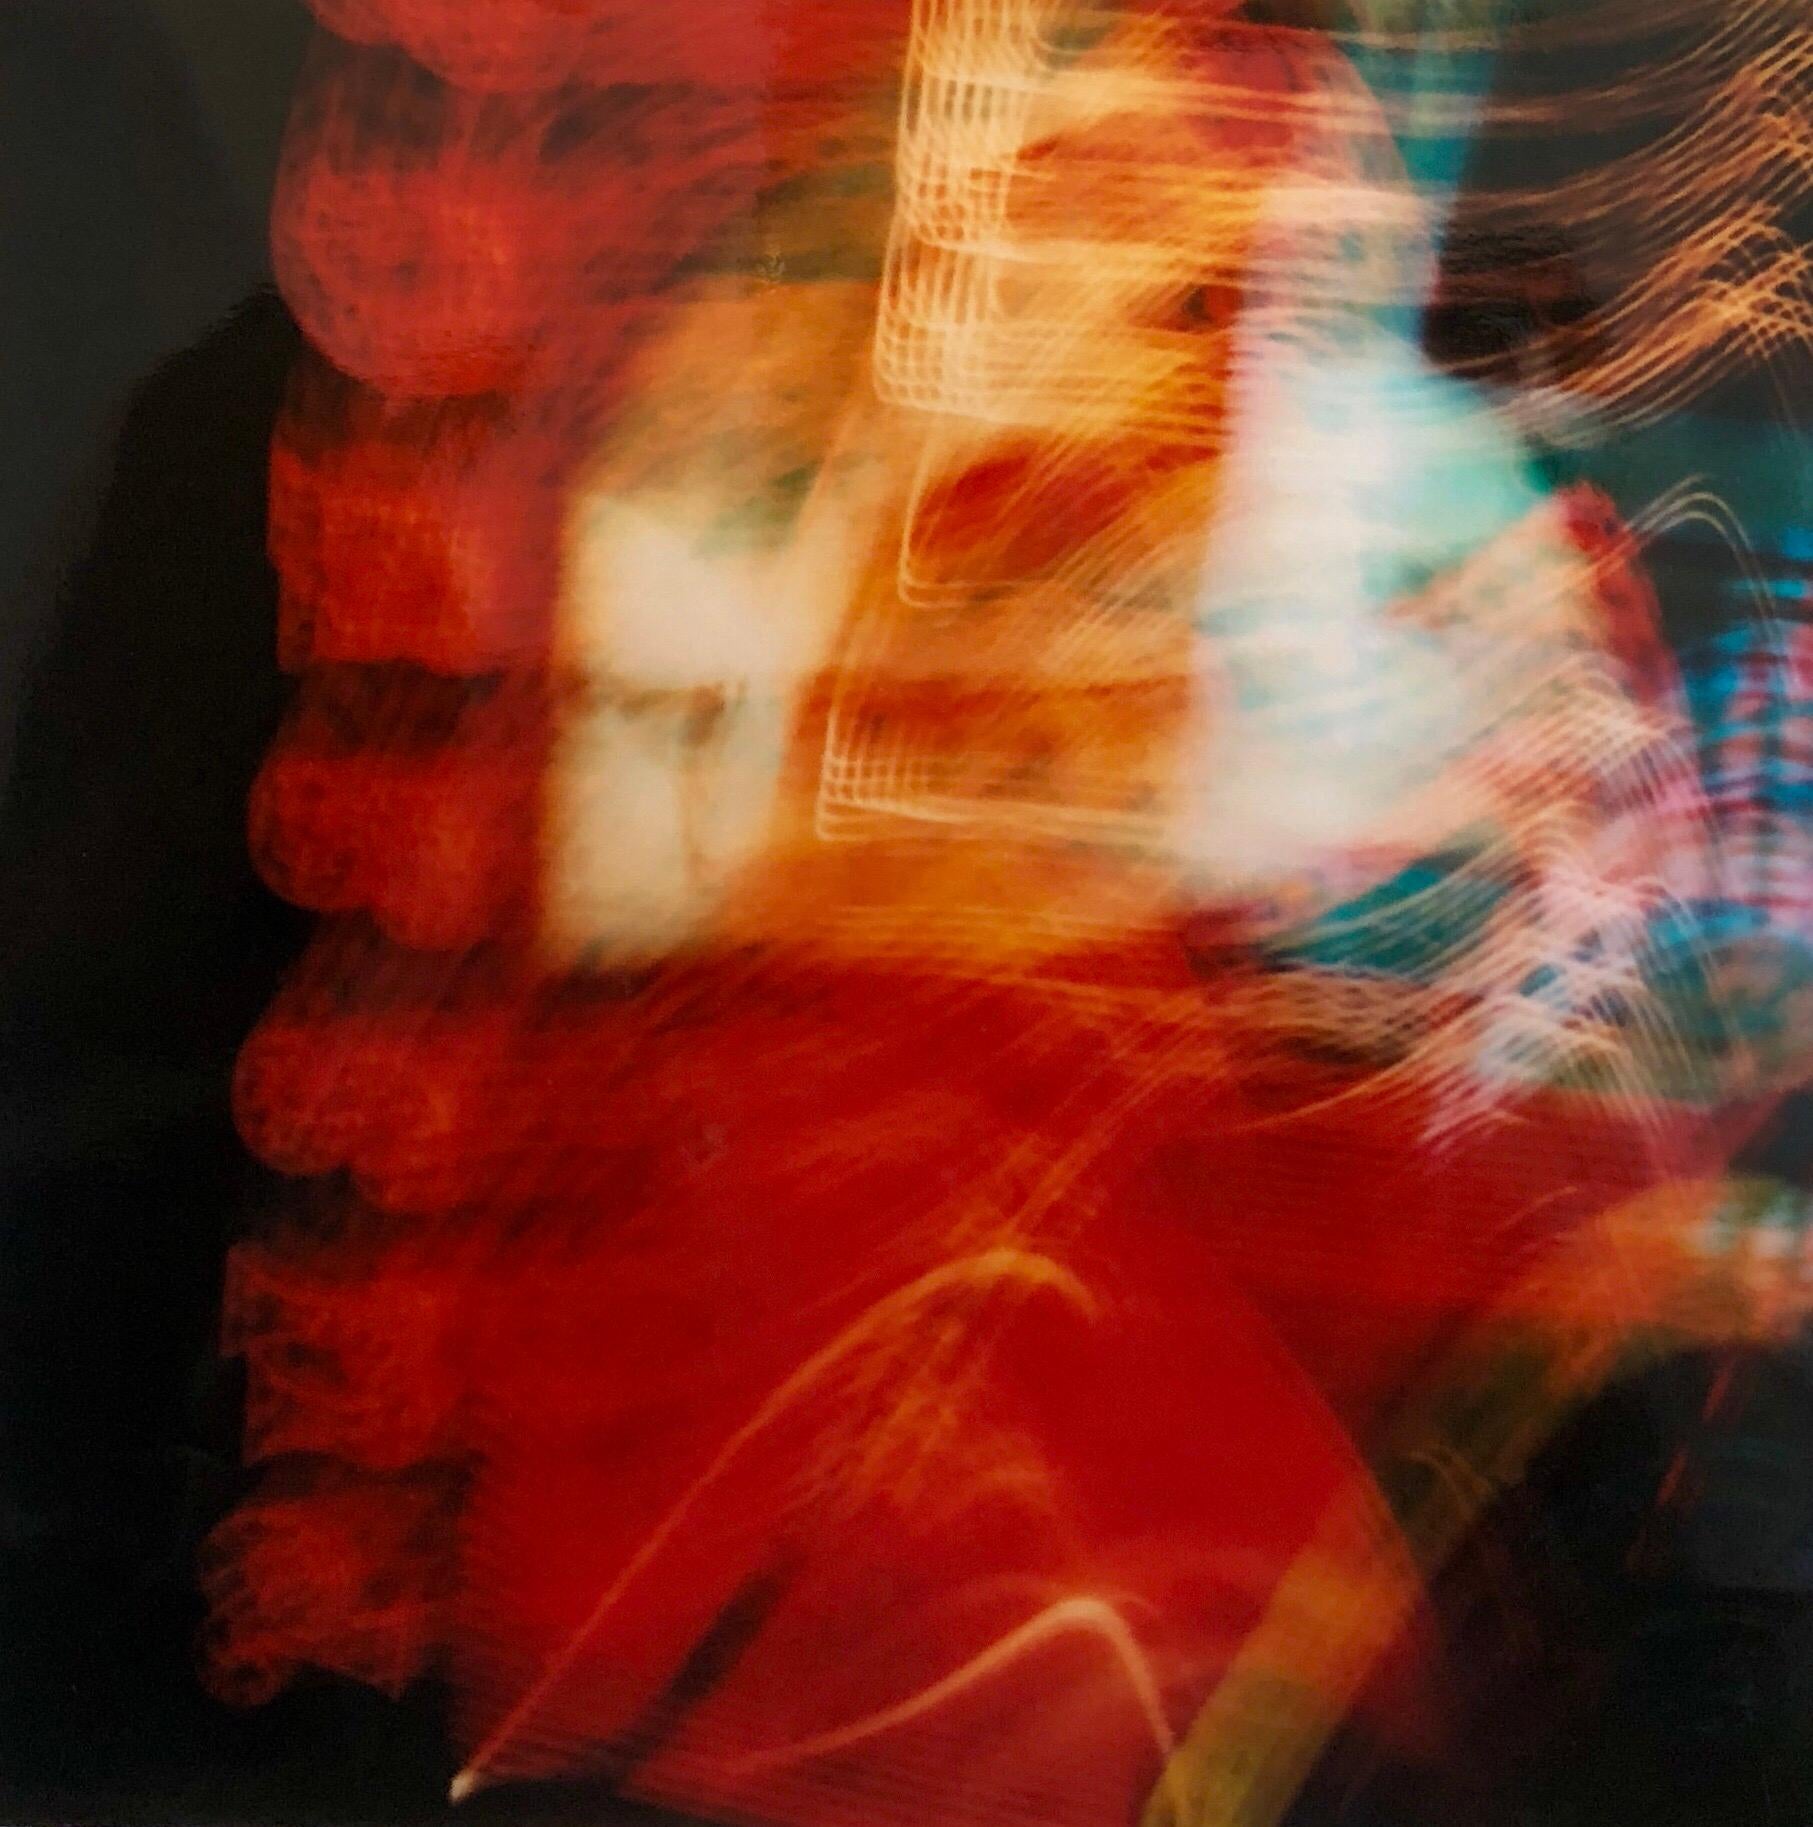 Unknown Abstract Photograph - Lights in Motion Photograph Chromo Photo Kodak Professional Endura